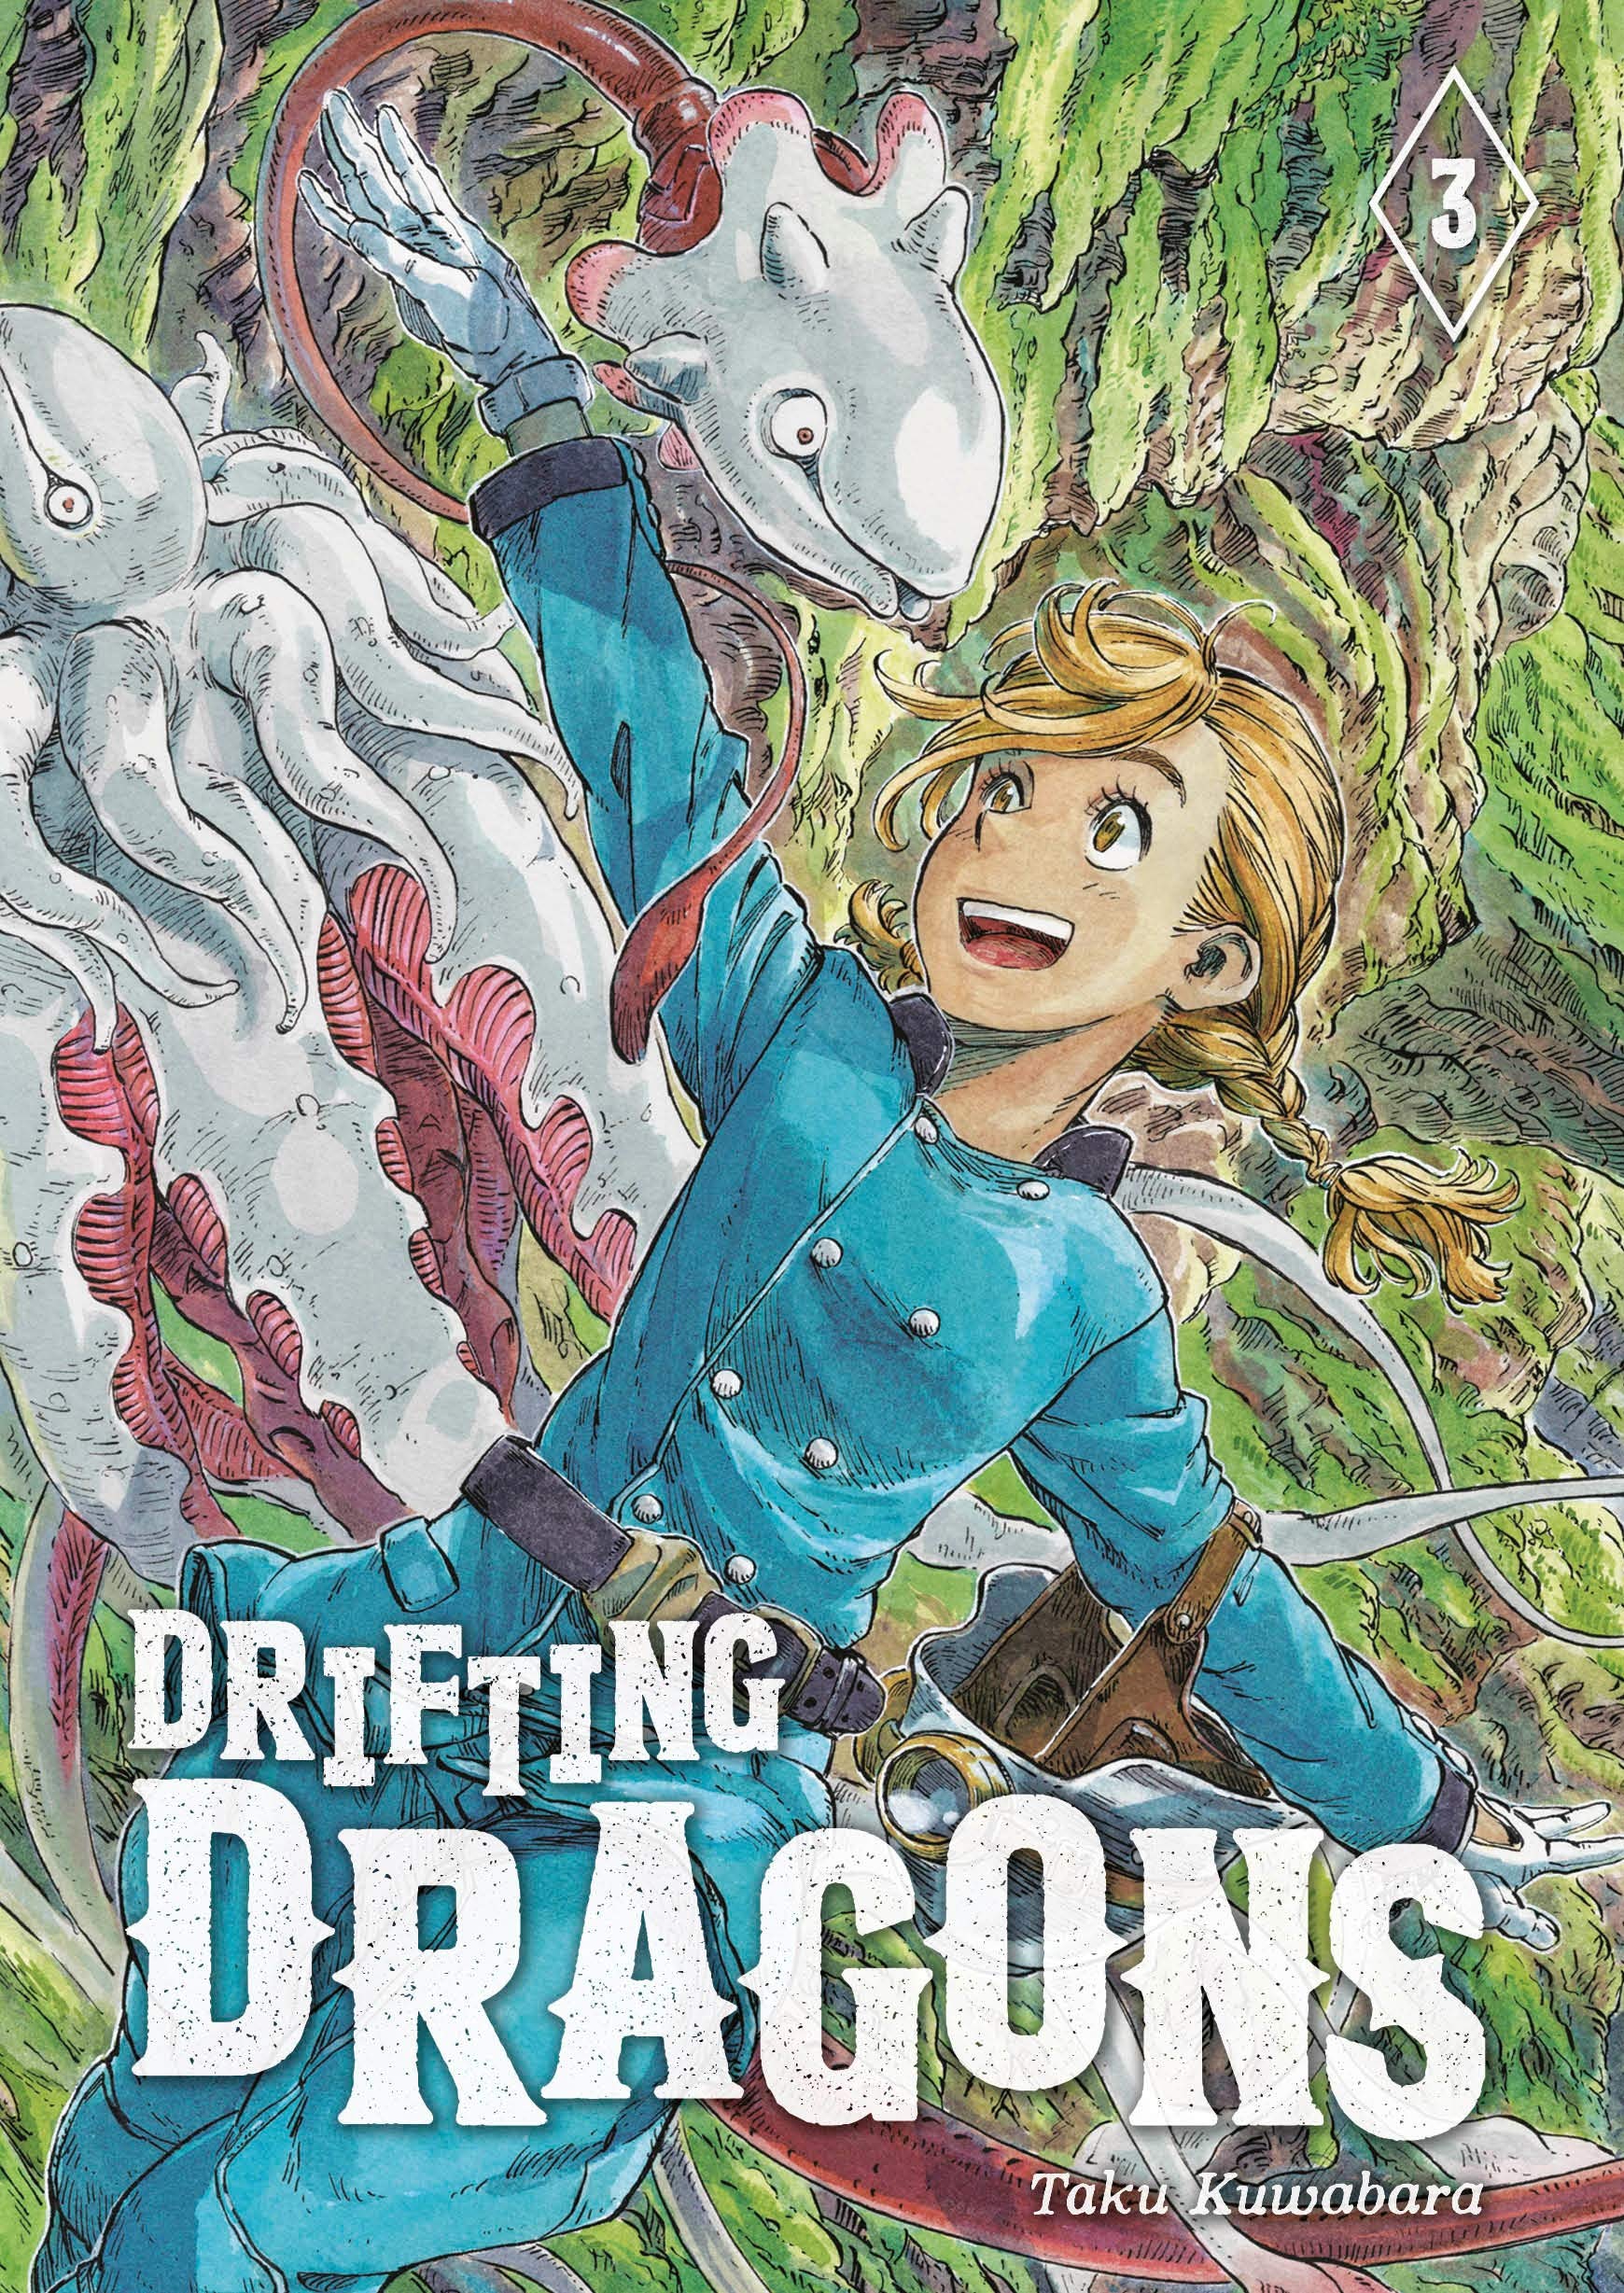 Drifting Dragons - Volume 3